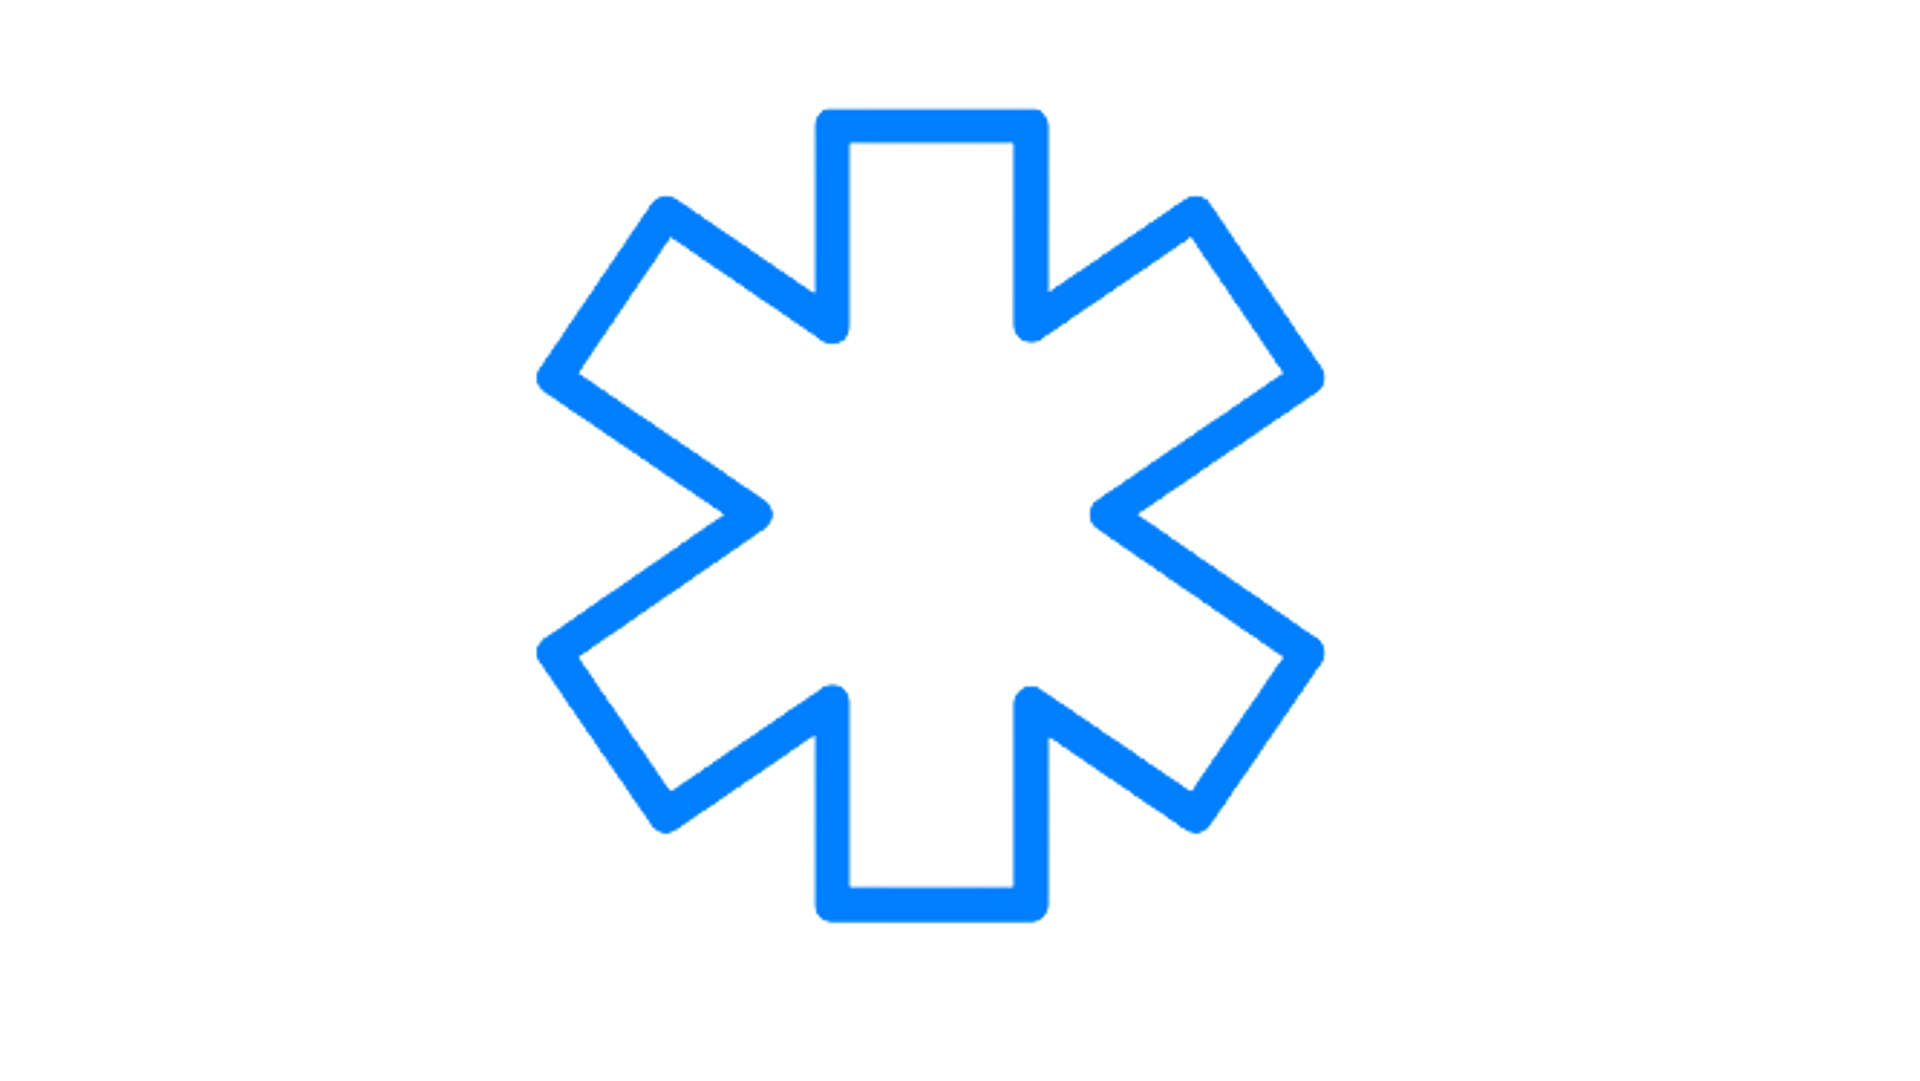 Blue outline of ambulance / emergency symbol